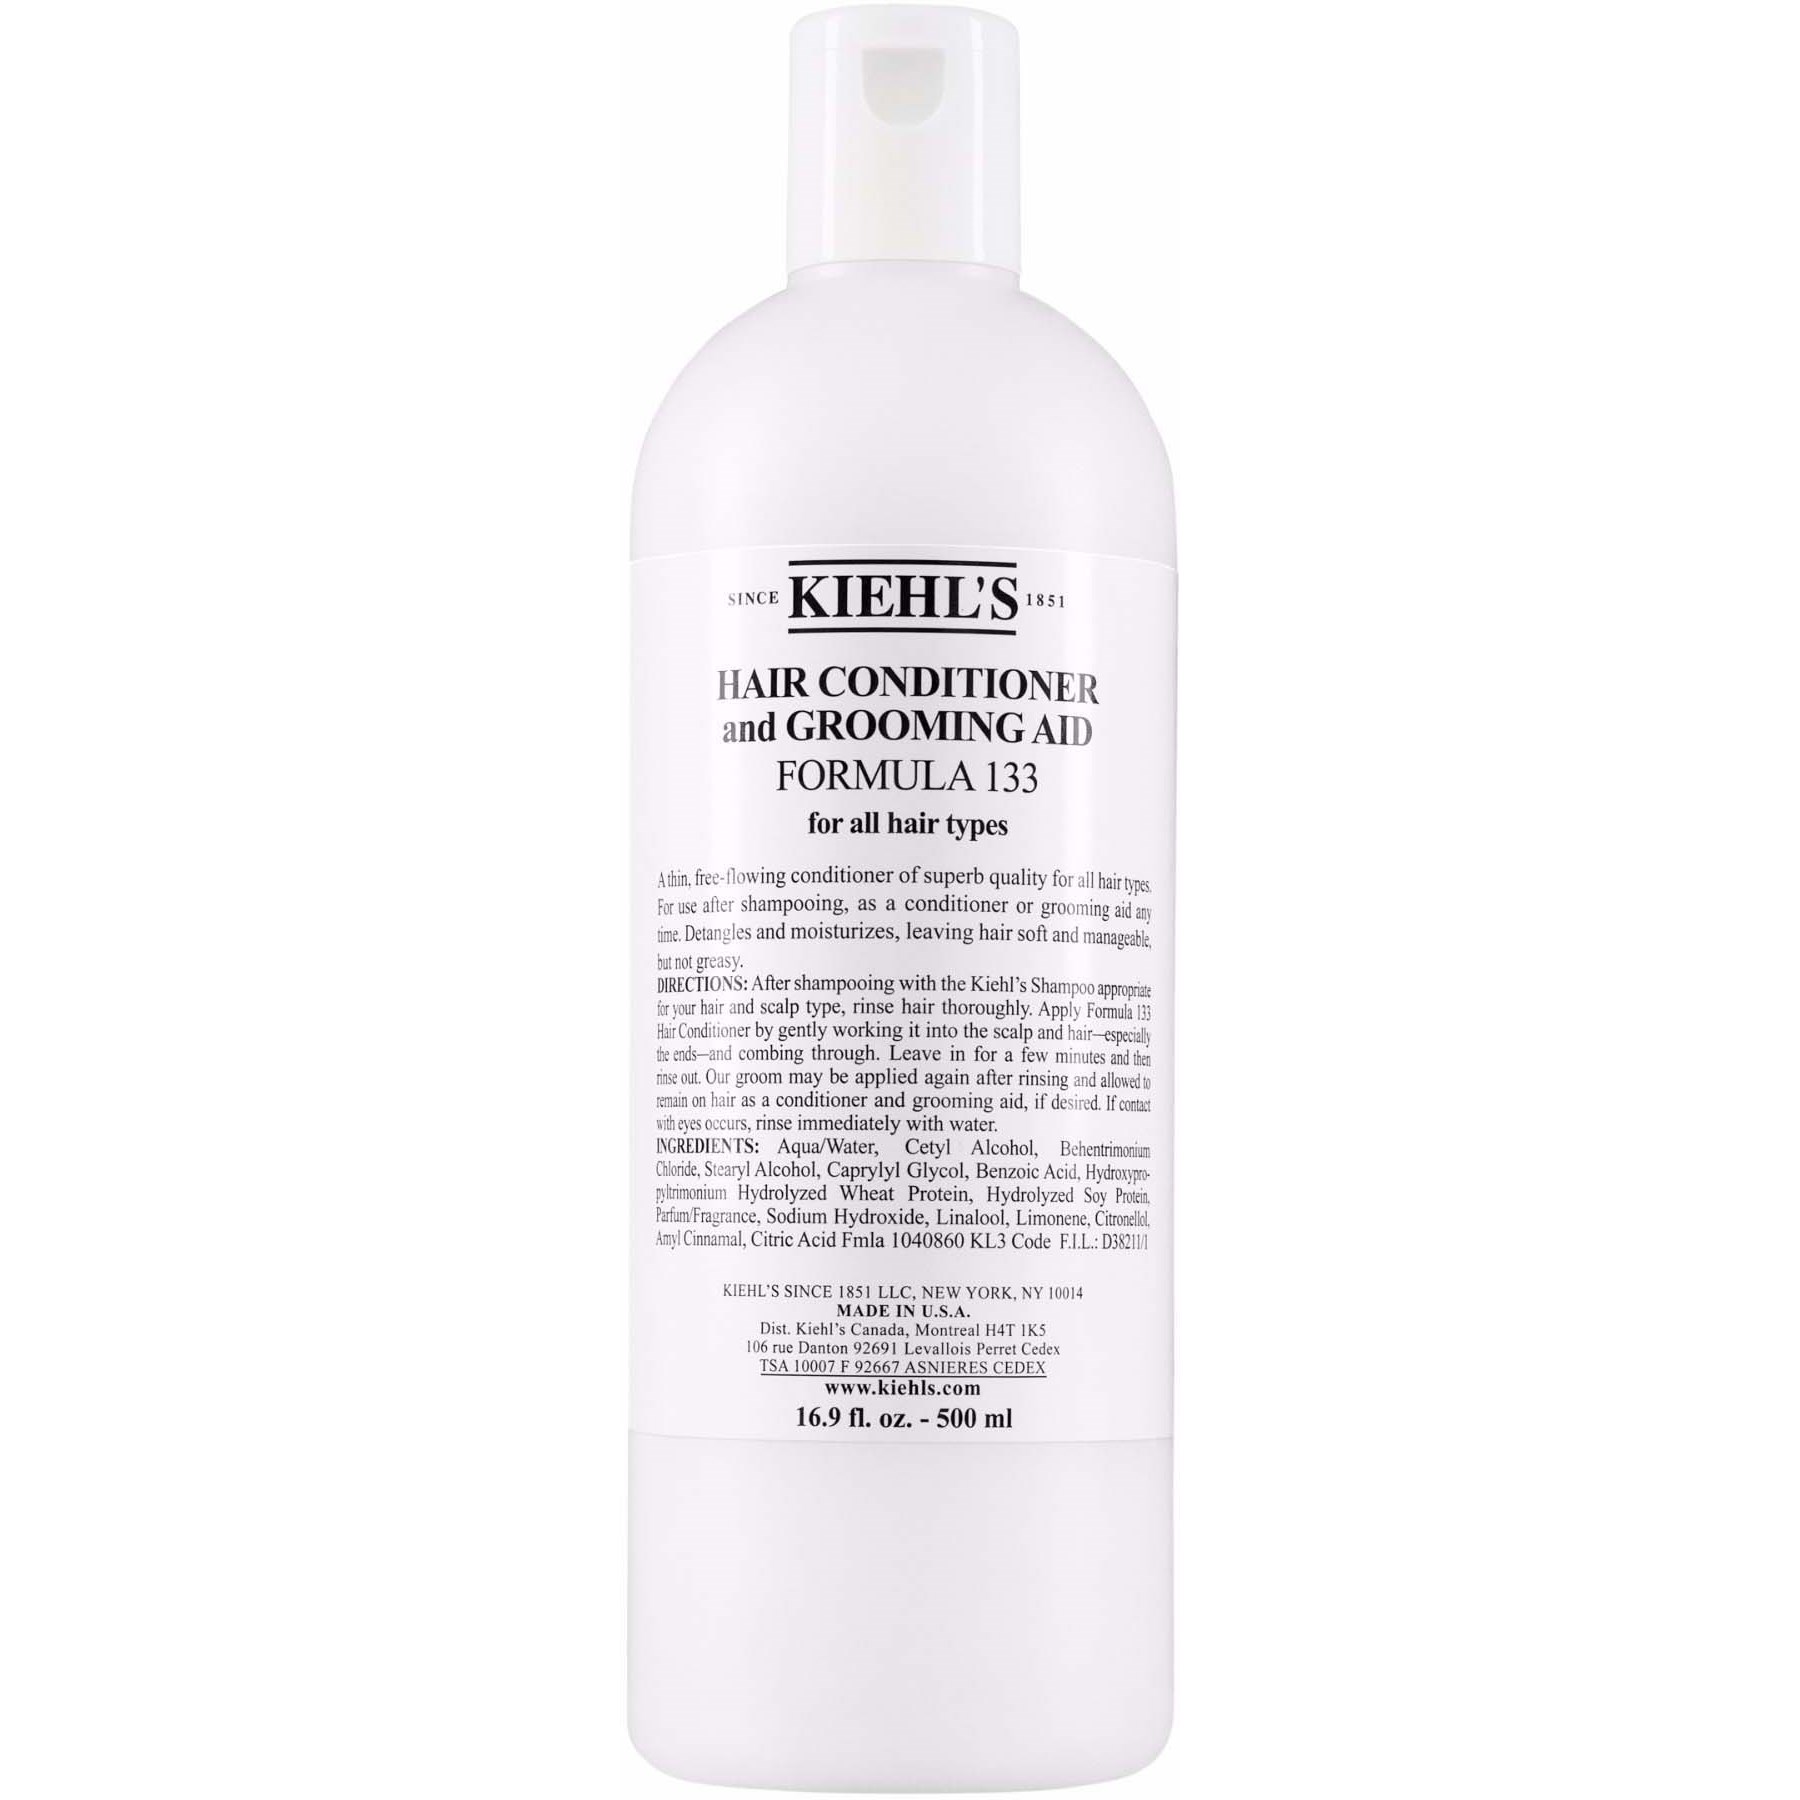 Kiehl's Formula 133 Hair Conditioner & Groom Aid 500 ml